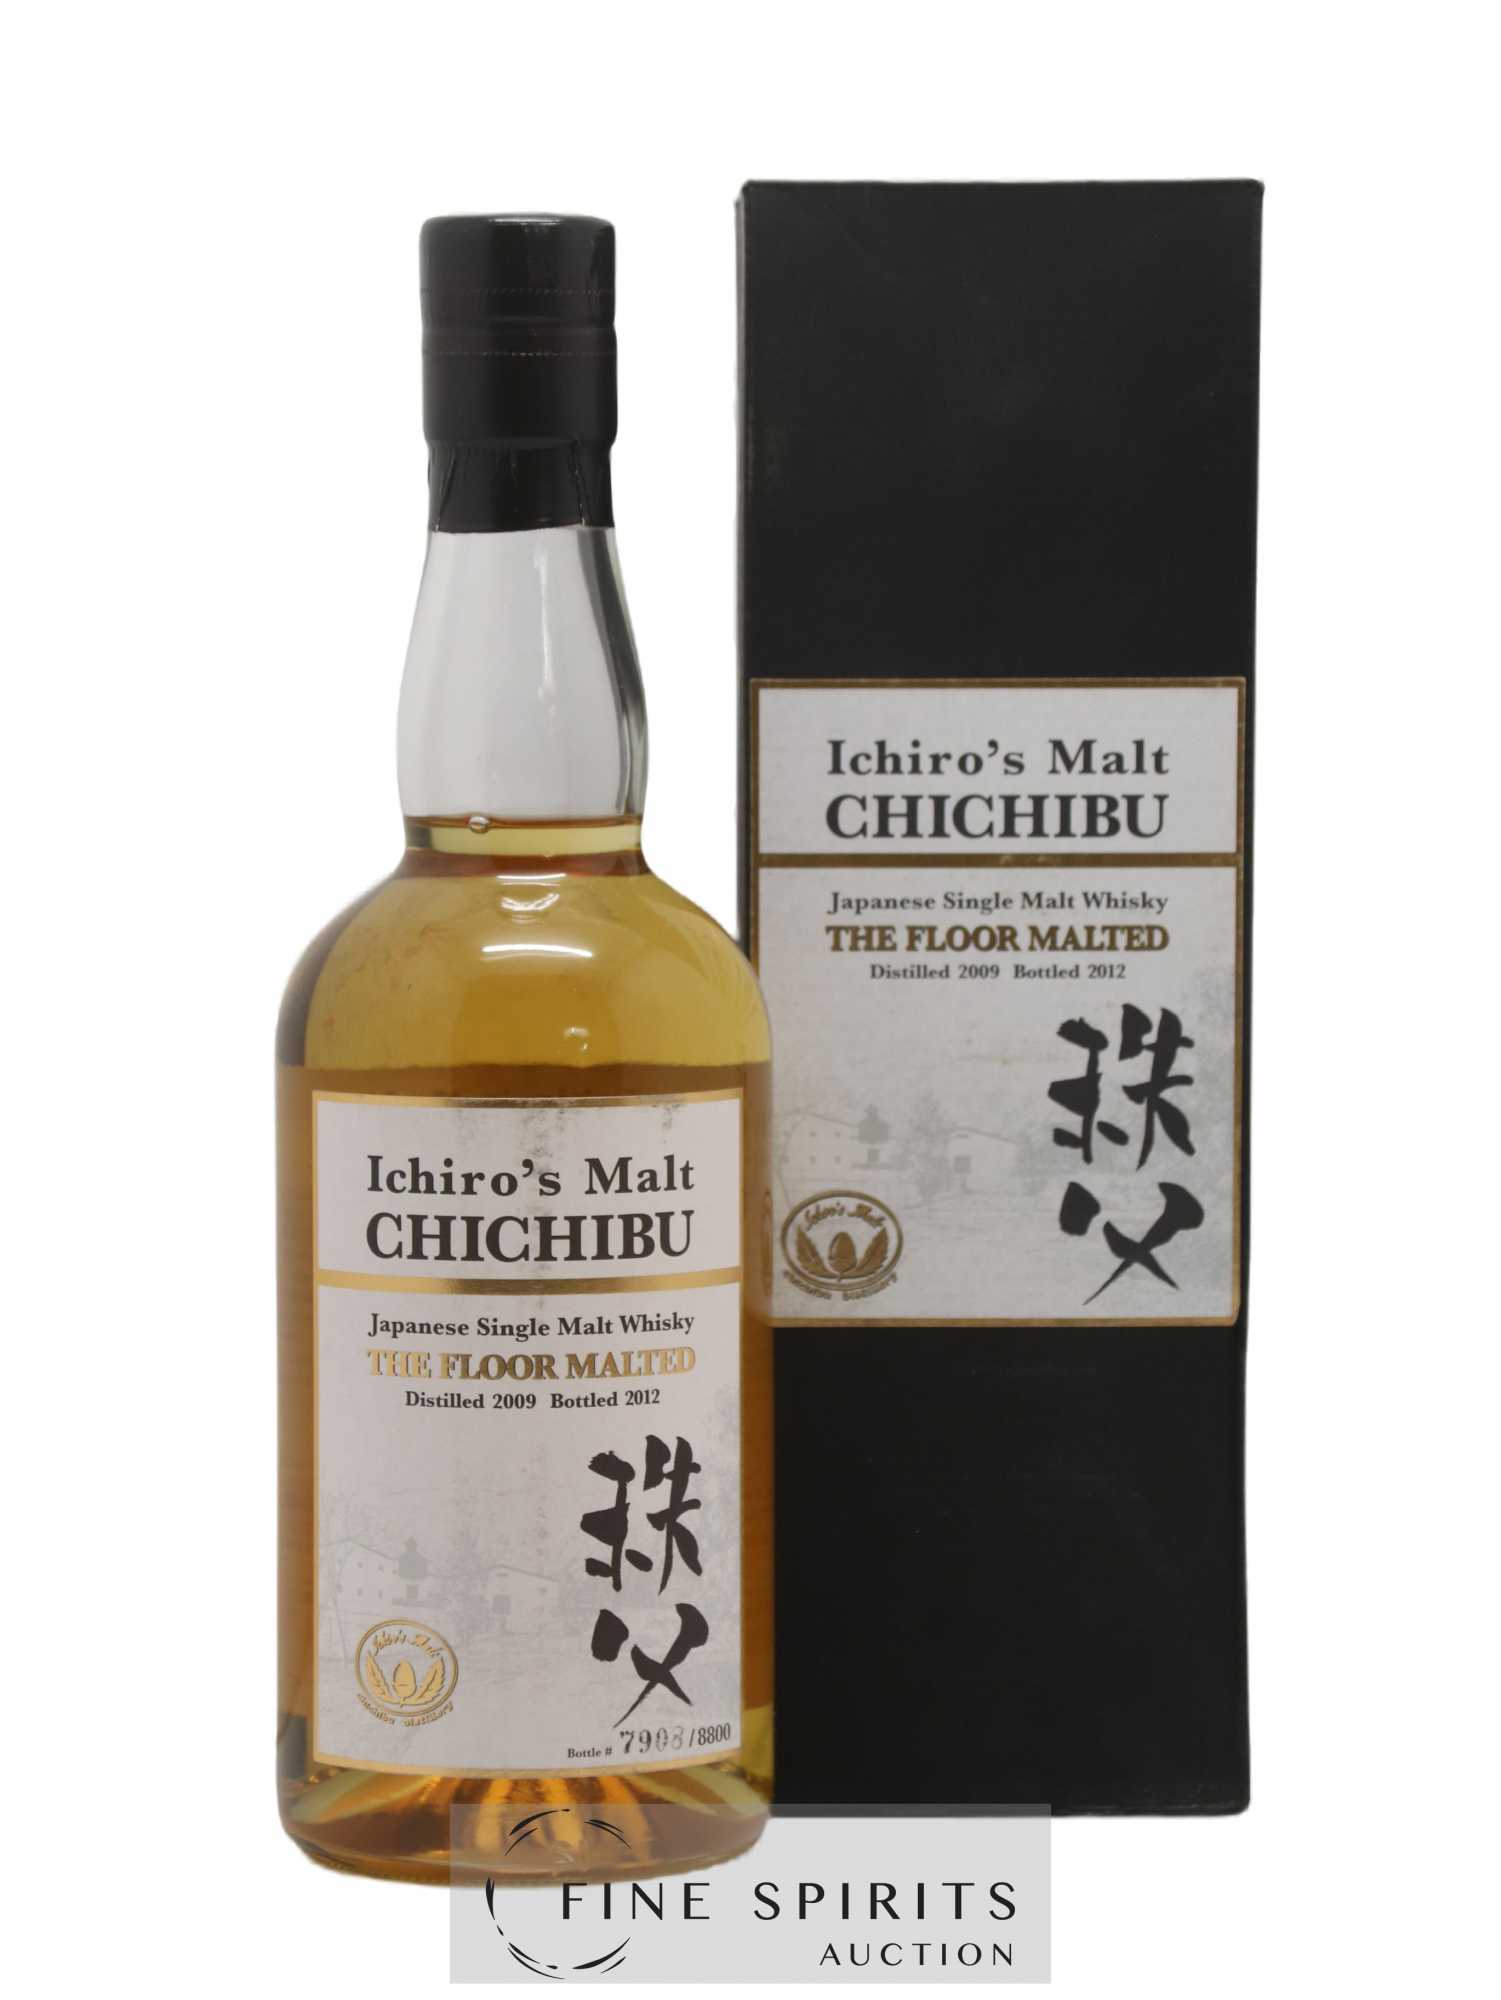 Chichibu 2009 Of. The Floor Malted One of 8800 - bottled 2012 Ichiro's Malt 